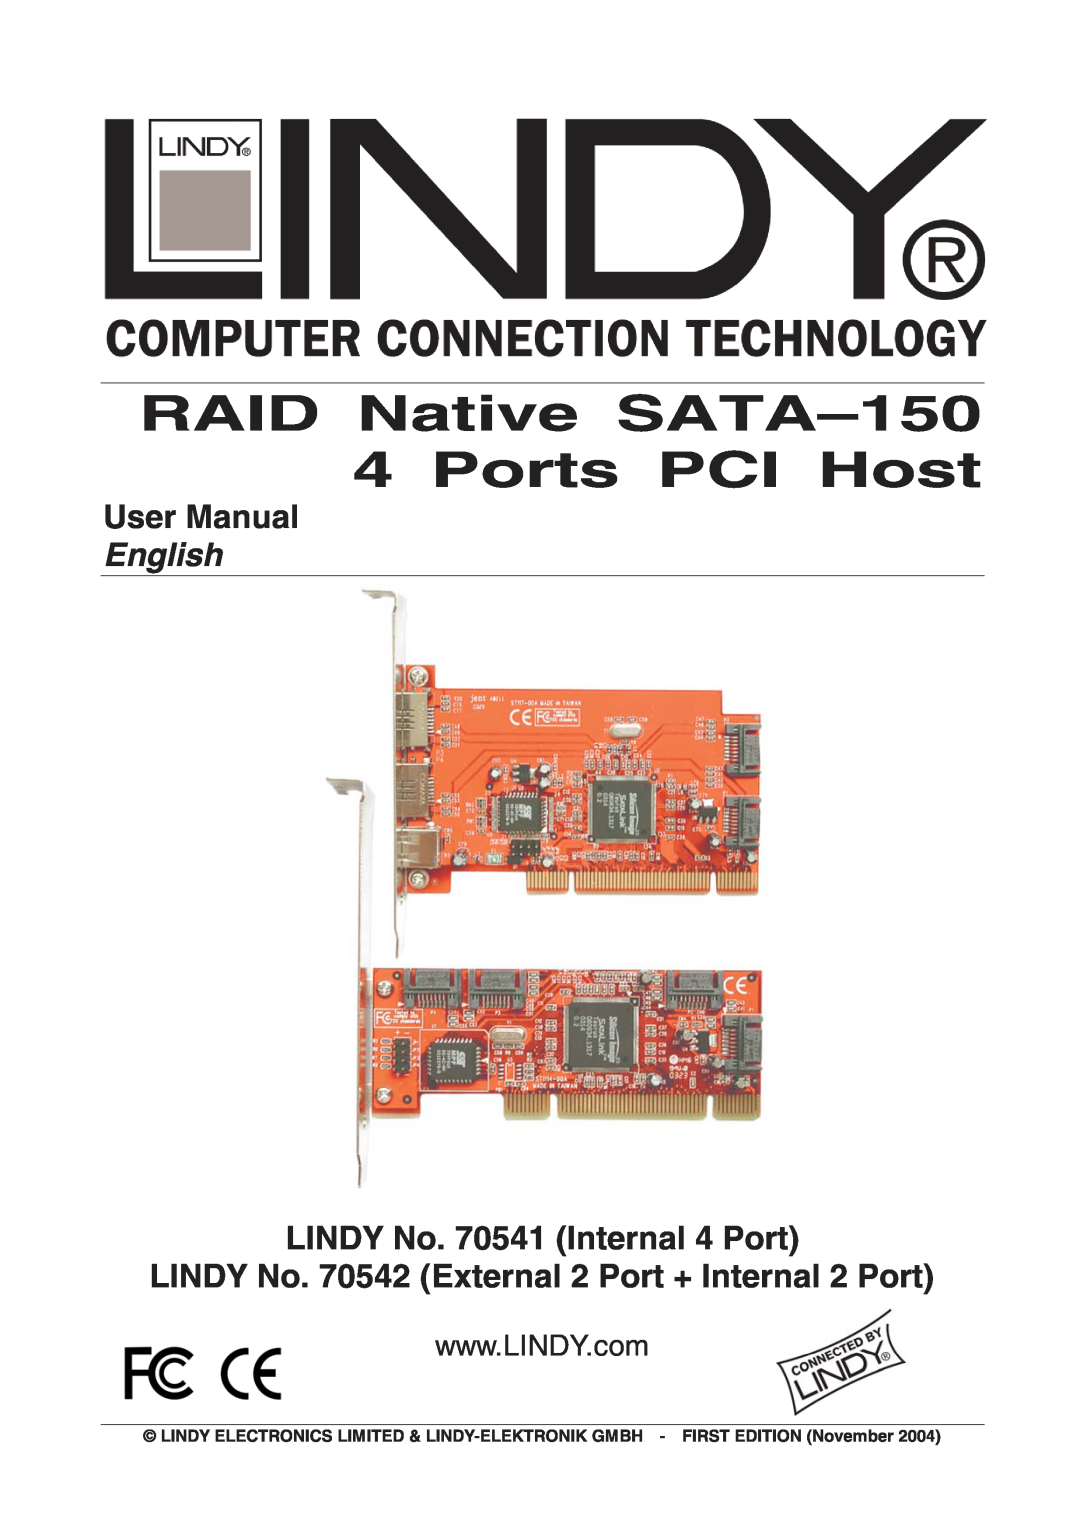 Lindy user manual User Manual, LINDY No. 70541 Internal 4 Port, LINDY No. 70542 External 2 Port + Internal 2 Port 